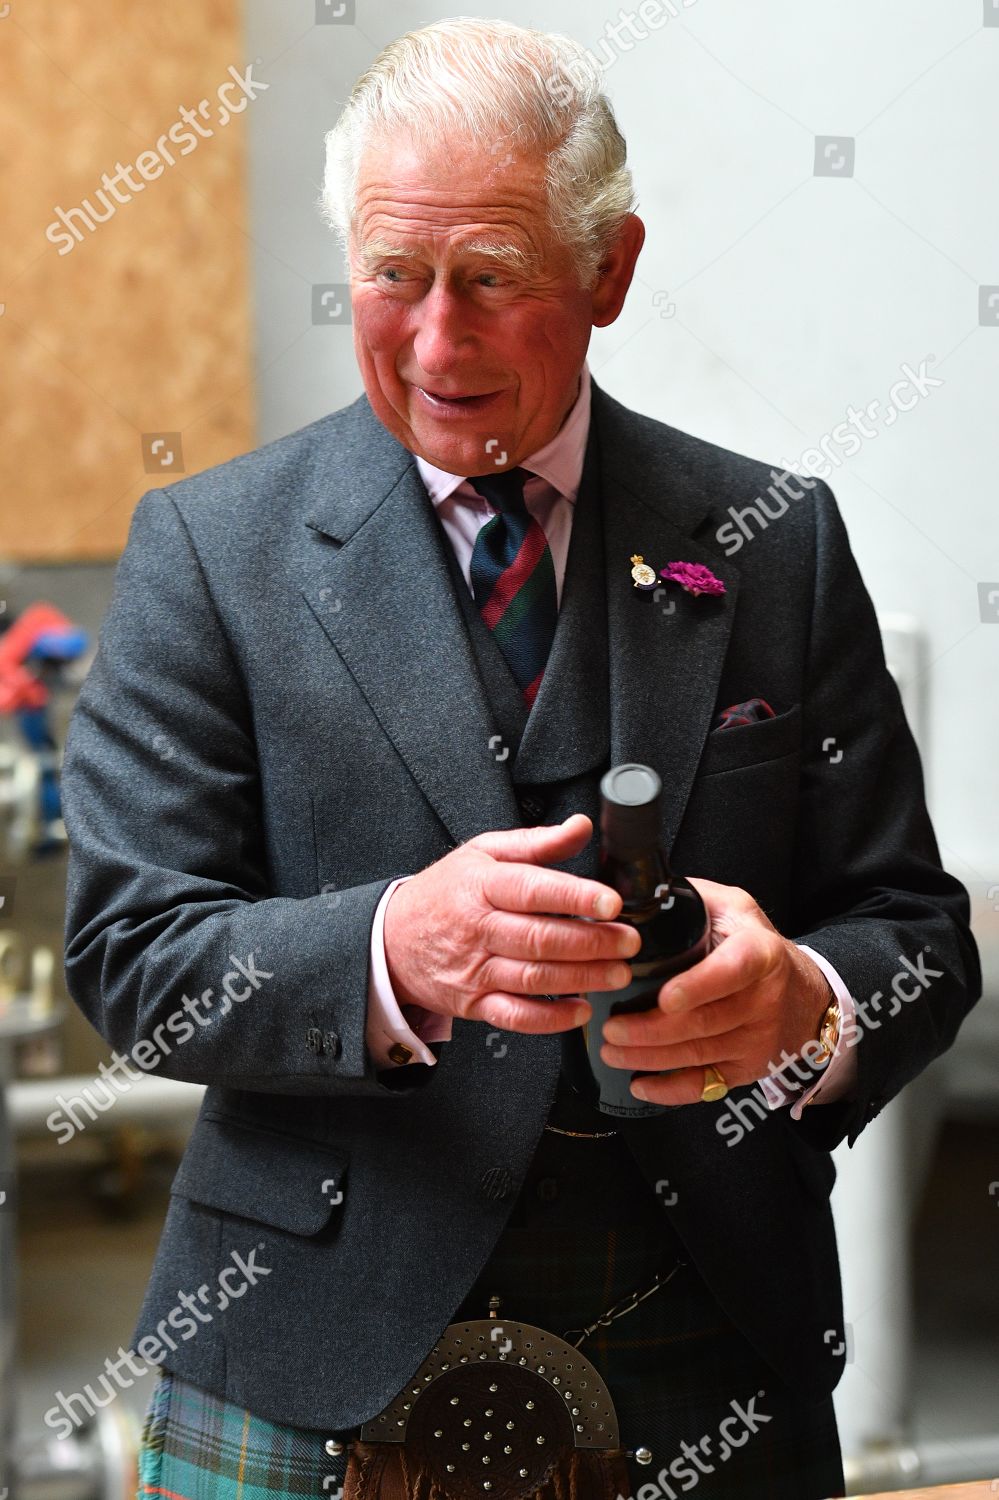 prince-charles-visits-caithness-scotland-uk-shutterstock-editorial-10349568ab.jpg